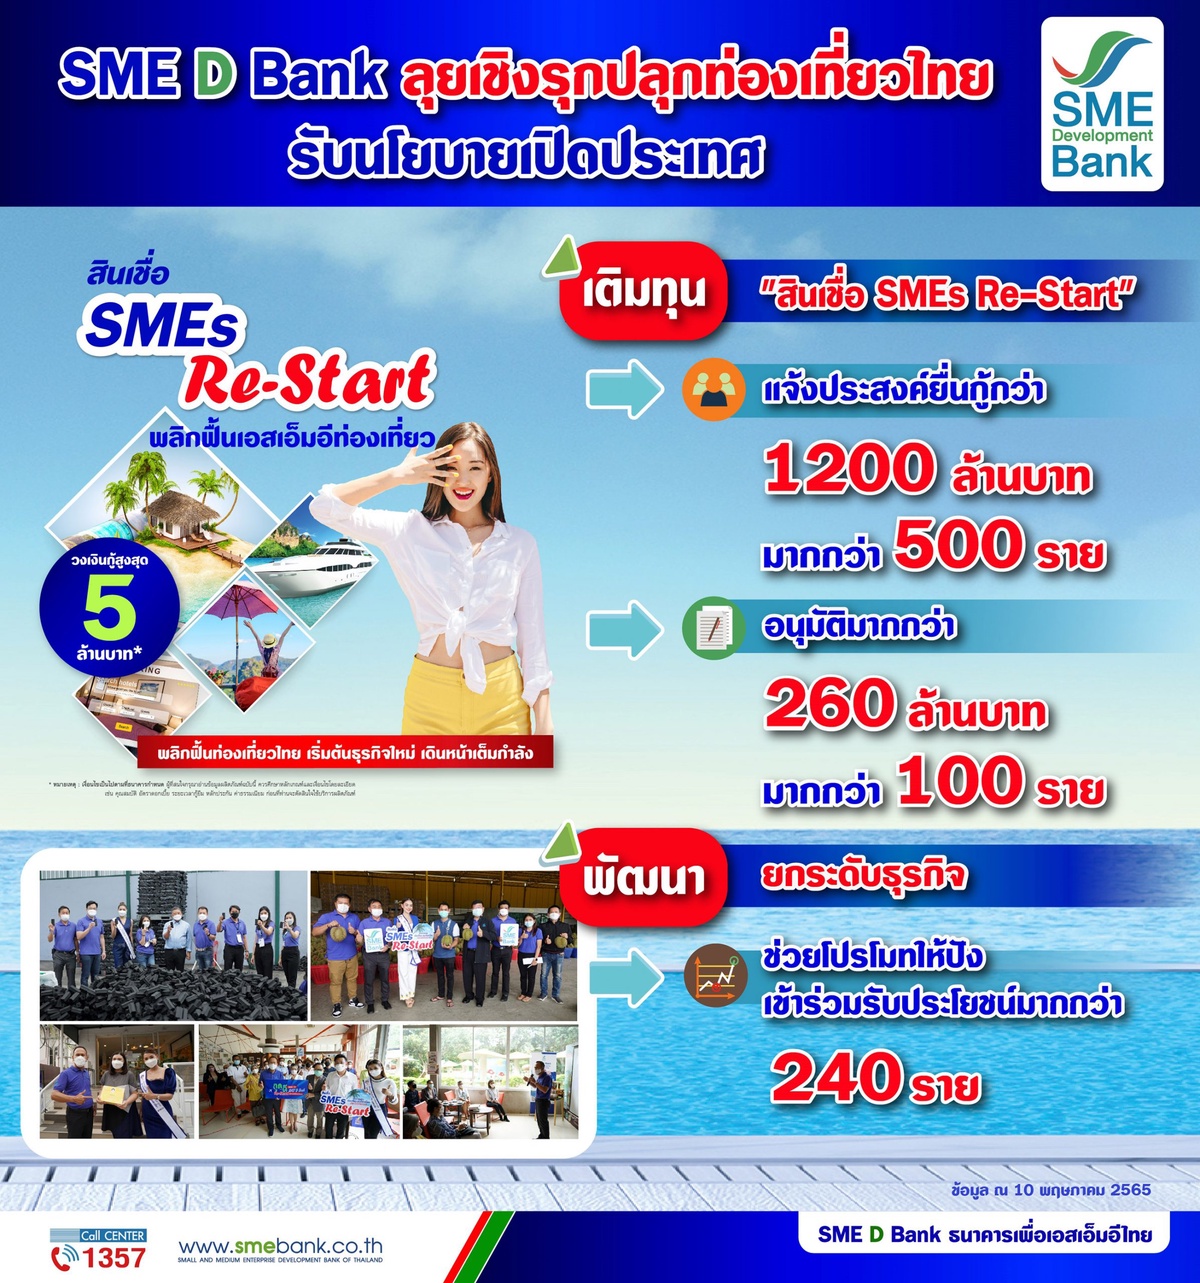 SME D Bank ลุยเชิงรุกปลุกท่องเที่ยวไทยรับนโยบายเปิดประเทศ ปลื้มเอสเอ็มอีตอบรับเติมทุนสินเชื่อ SMEs Re-Start